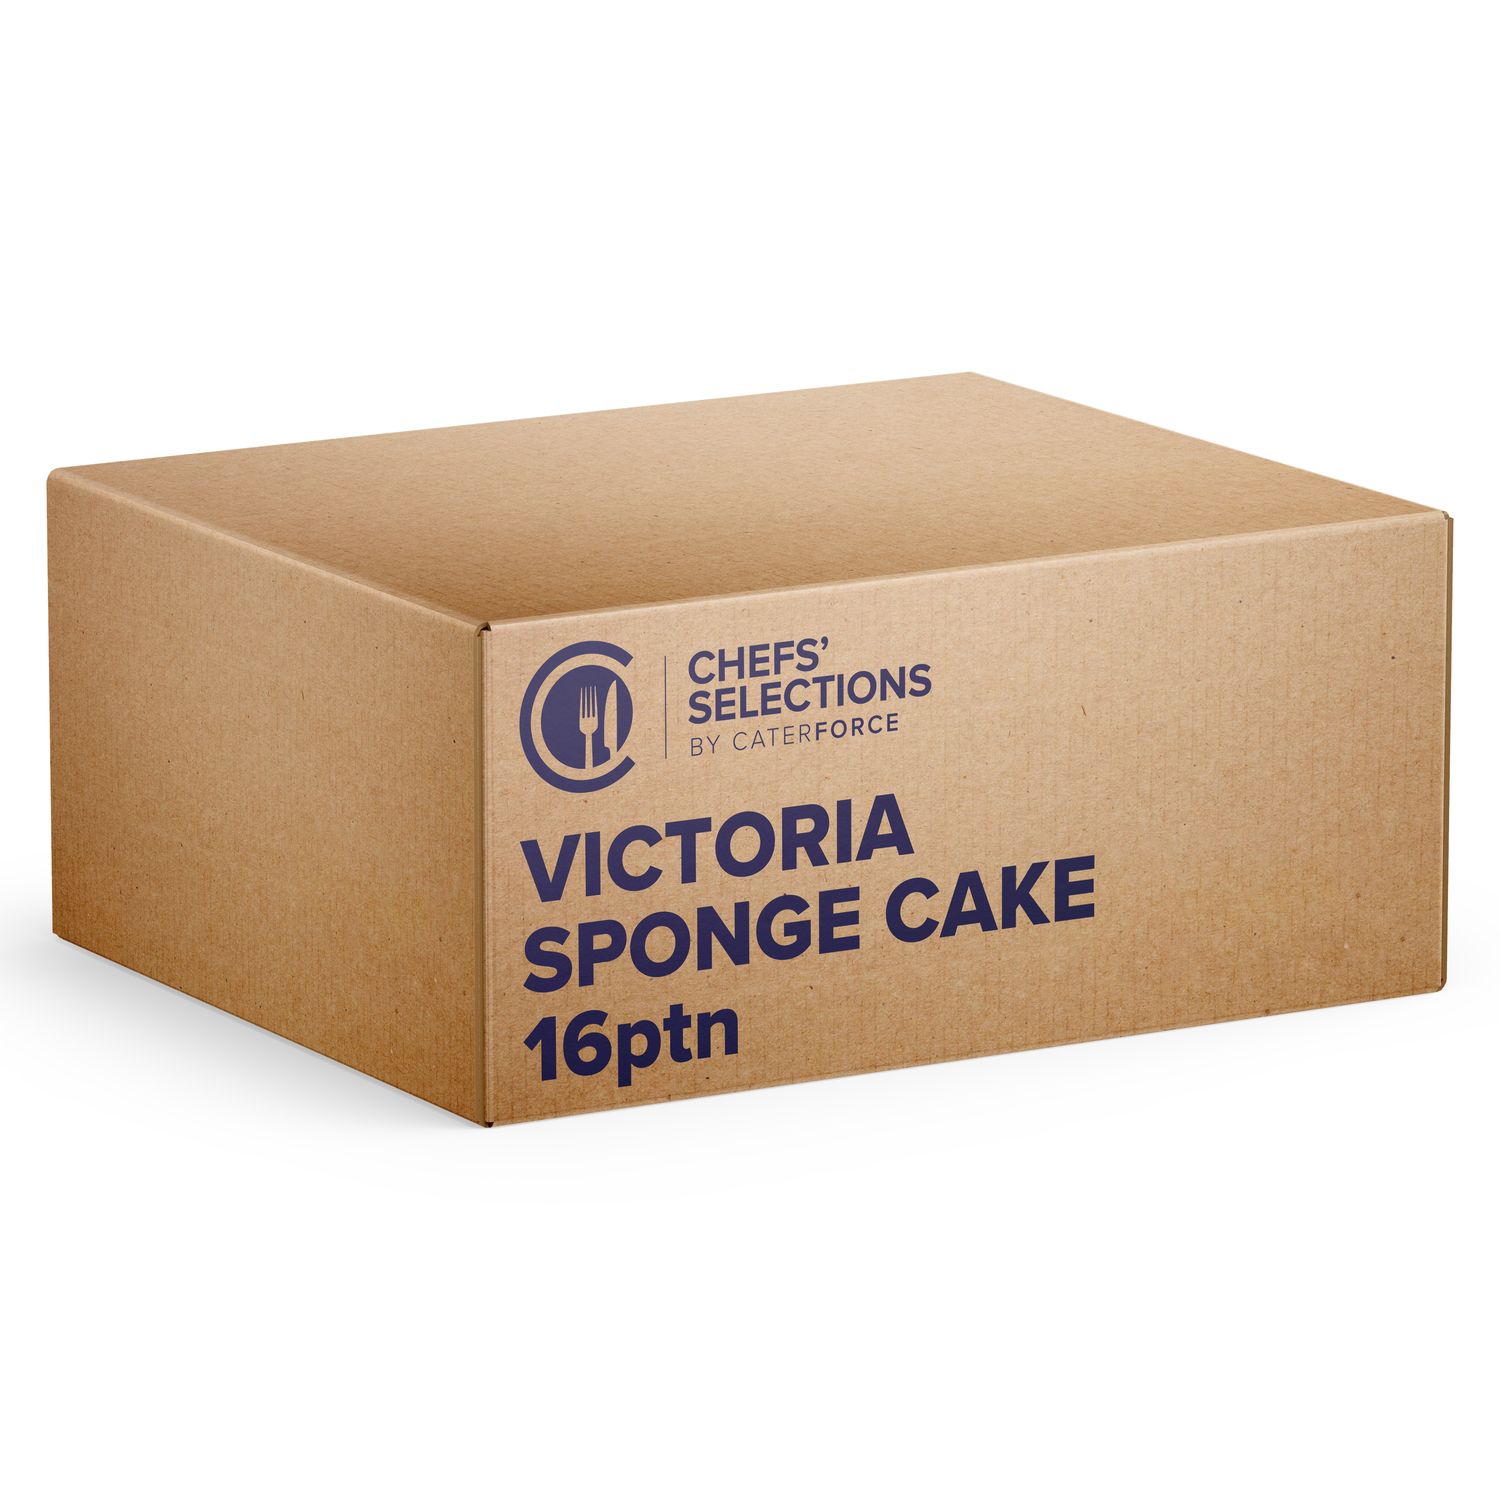 Chefs’ Selections Victoria Sponge Cake (1 x 16p/ptn)